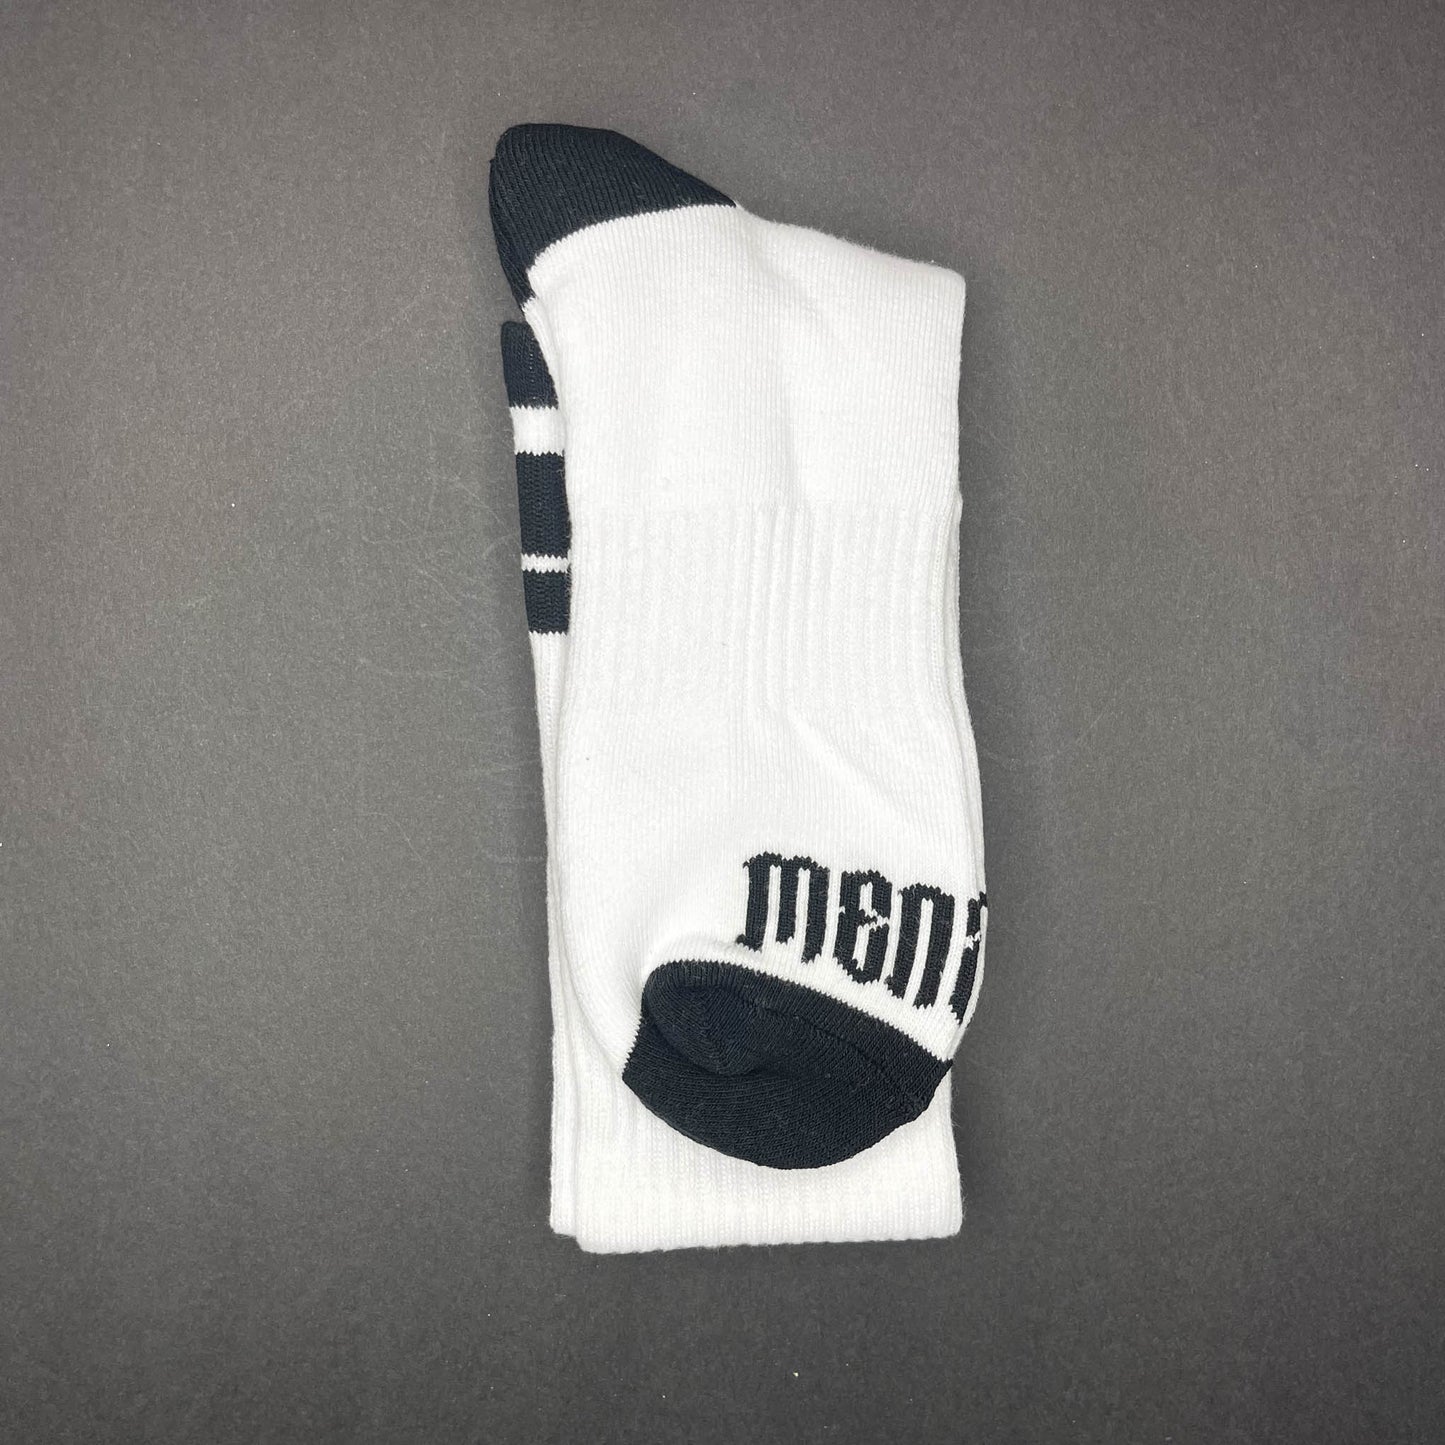 Menace Hood Rat Socks - Black & White